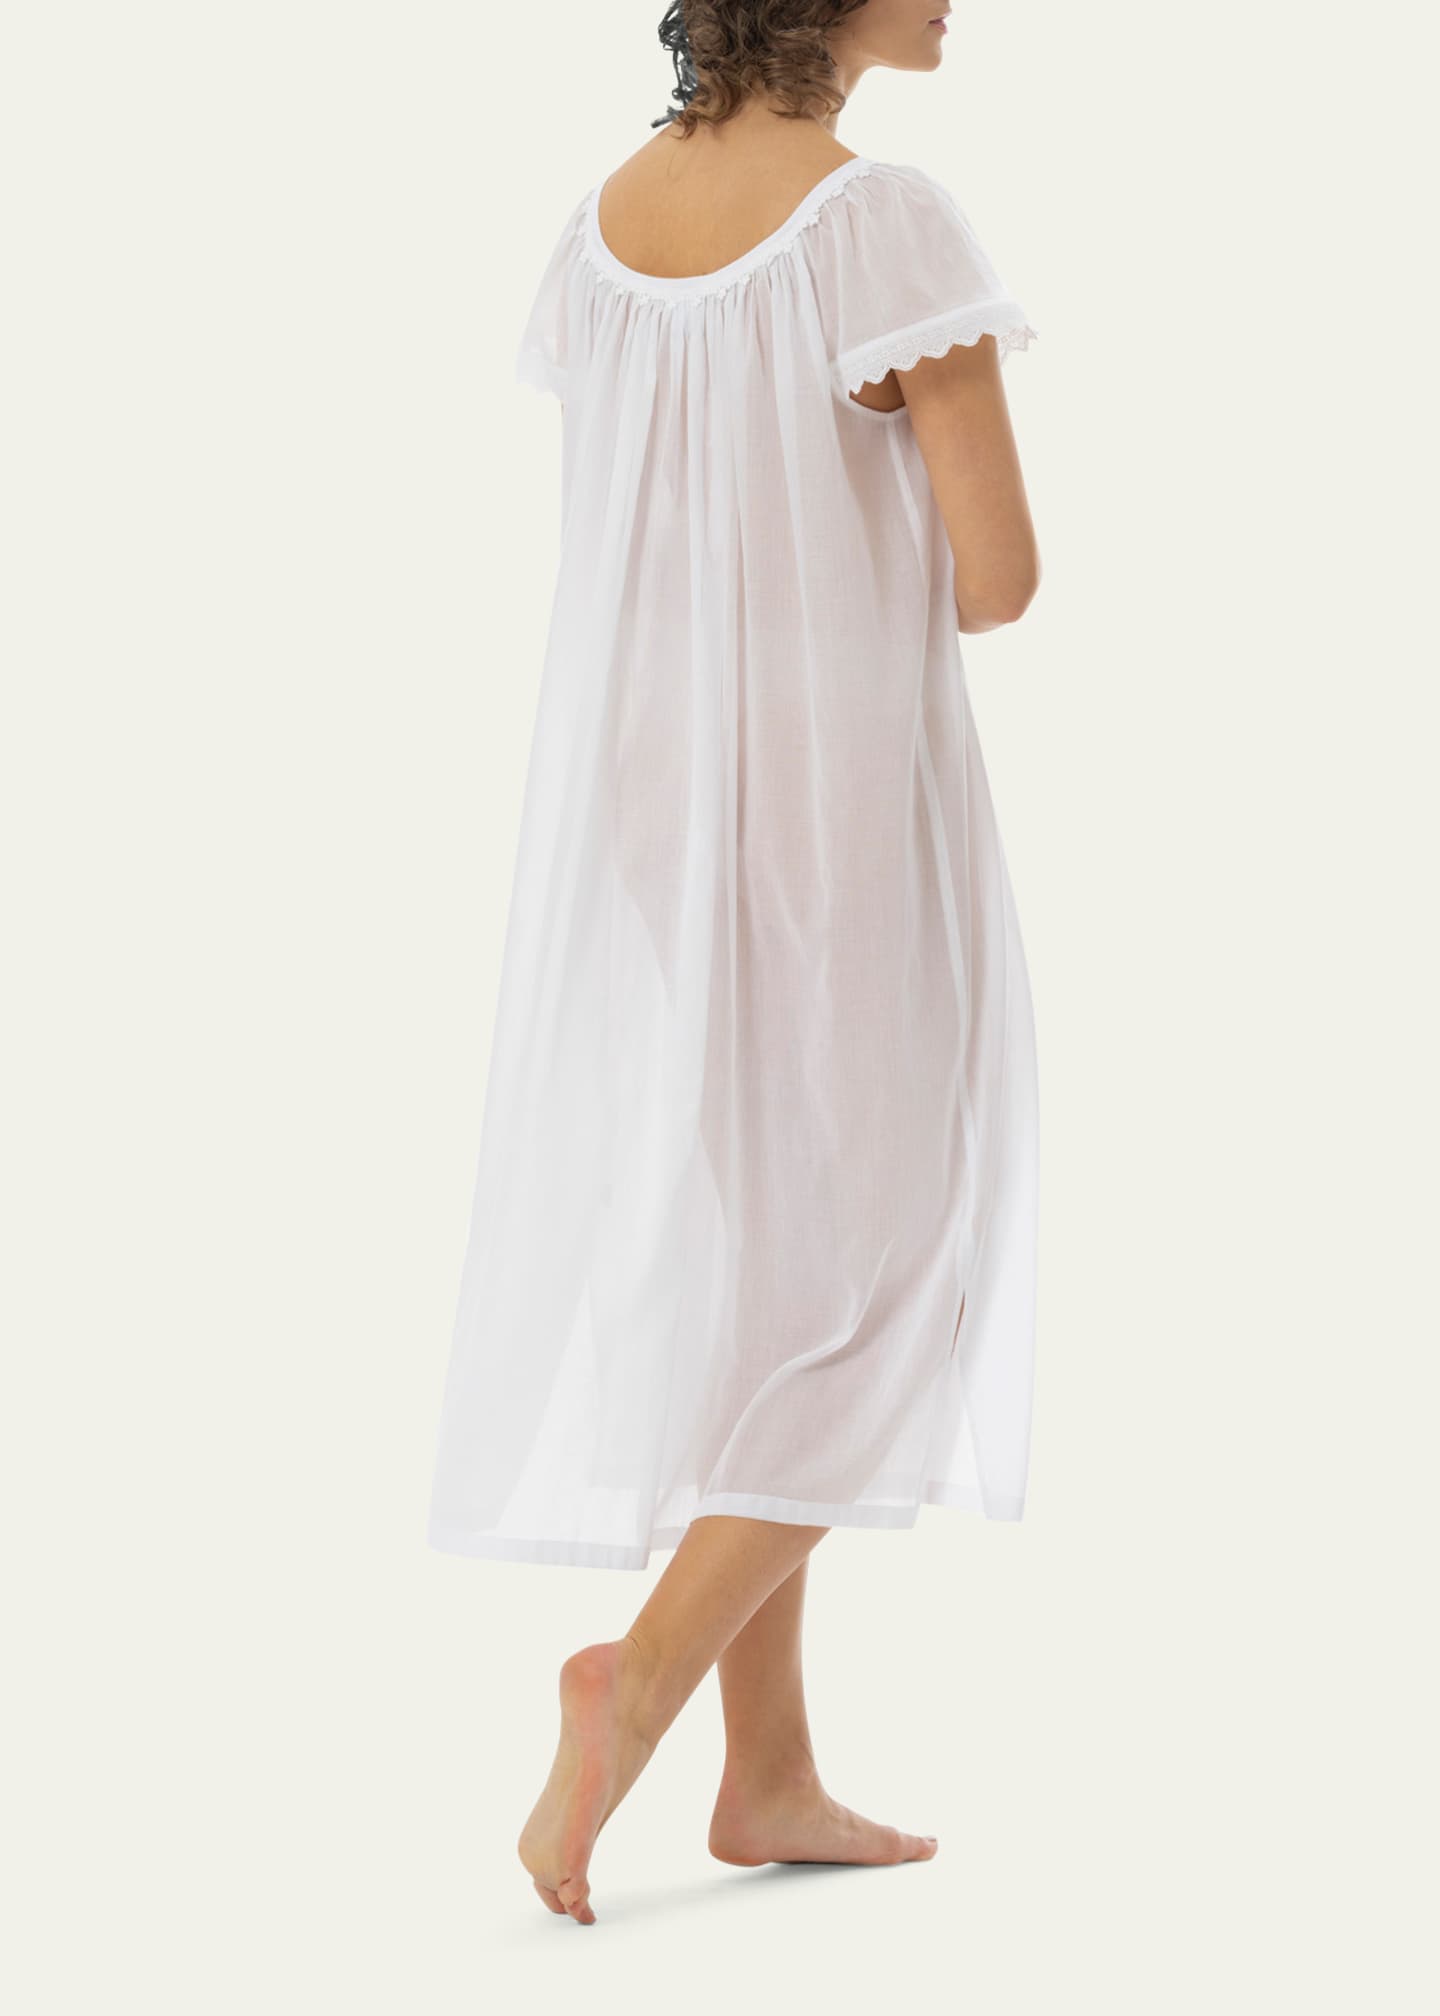 Celestine Crissy Ruched Lace-Trim Nightgown - Bergdorf Goodman